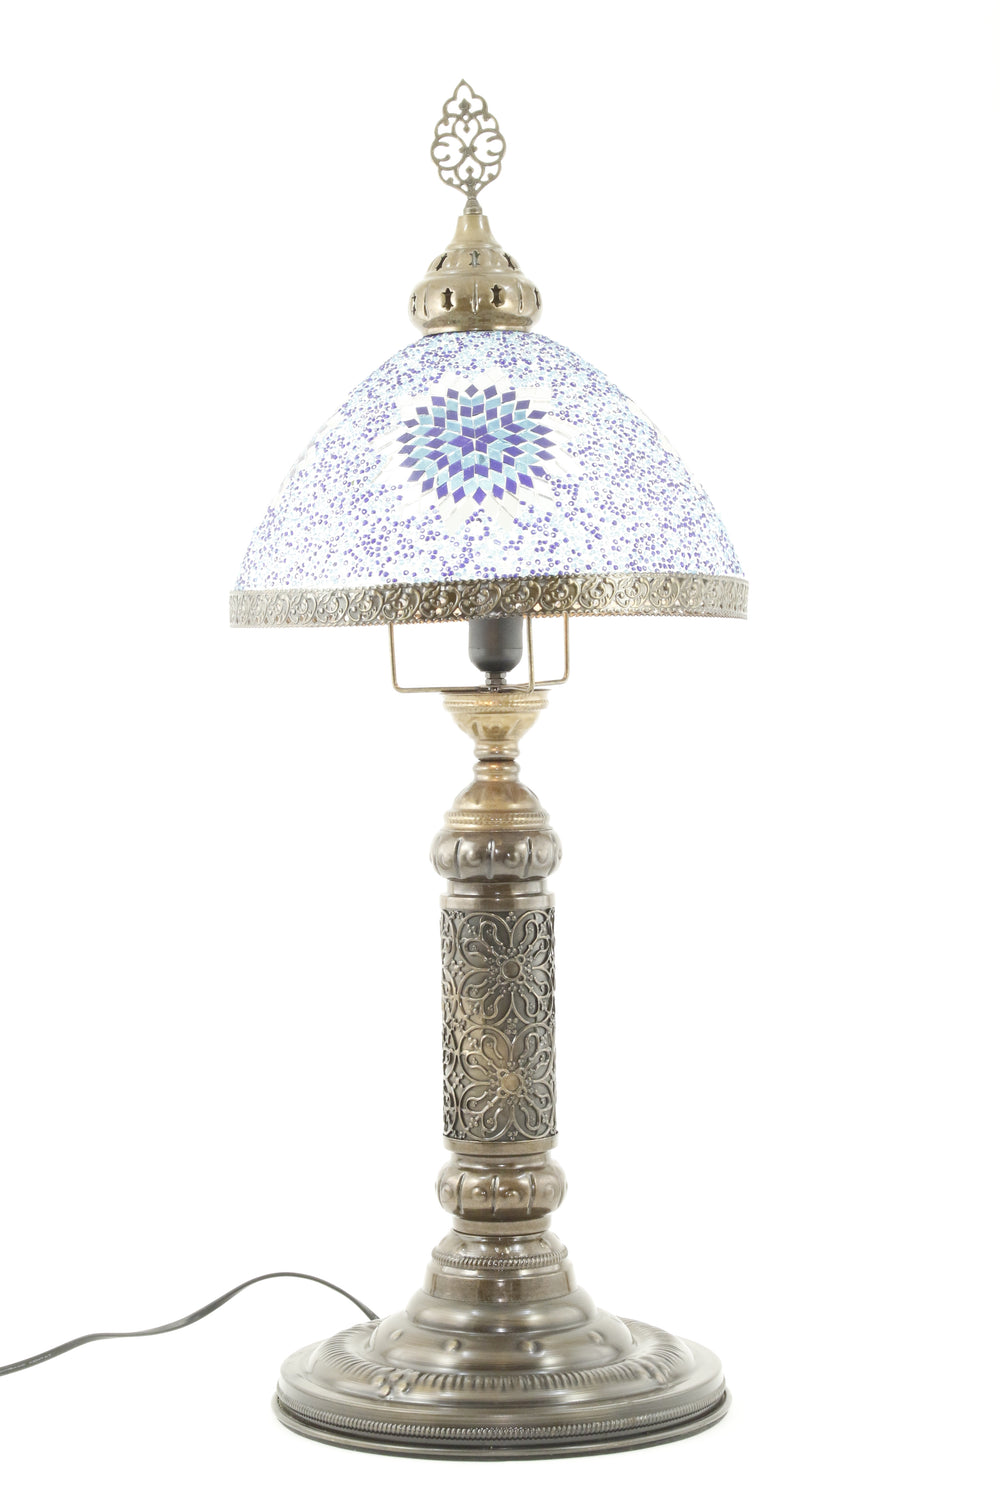 TURKISH MOSAIC GLASS TIFFANY LAMP BLUE -TURNED ON